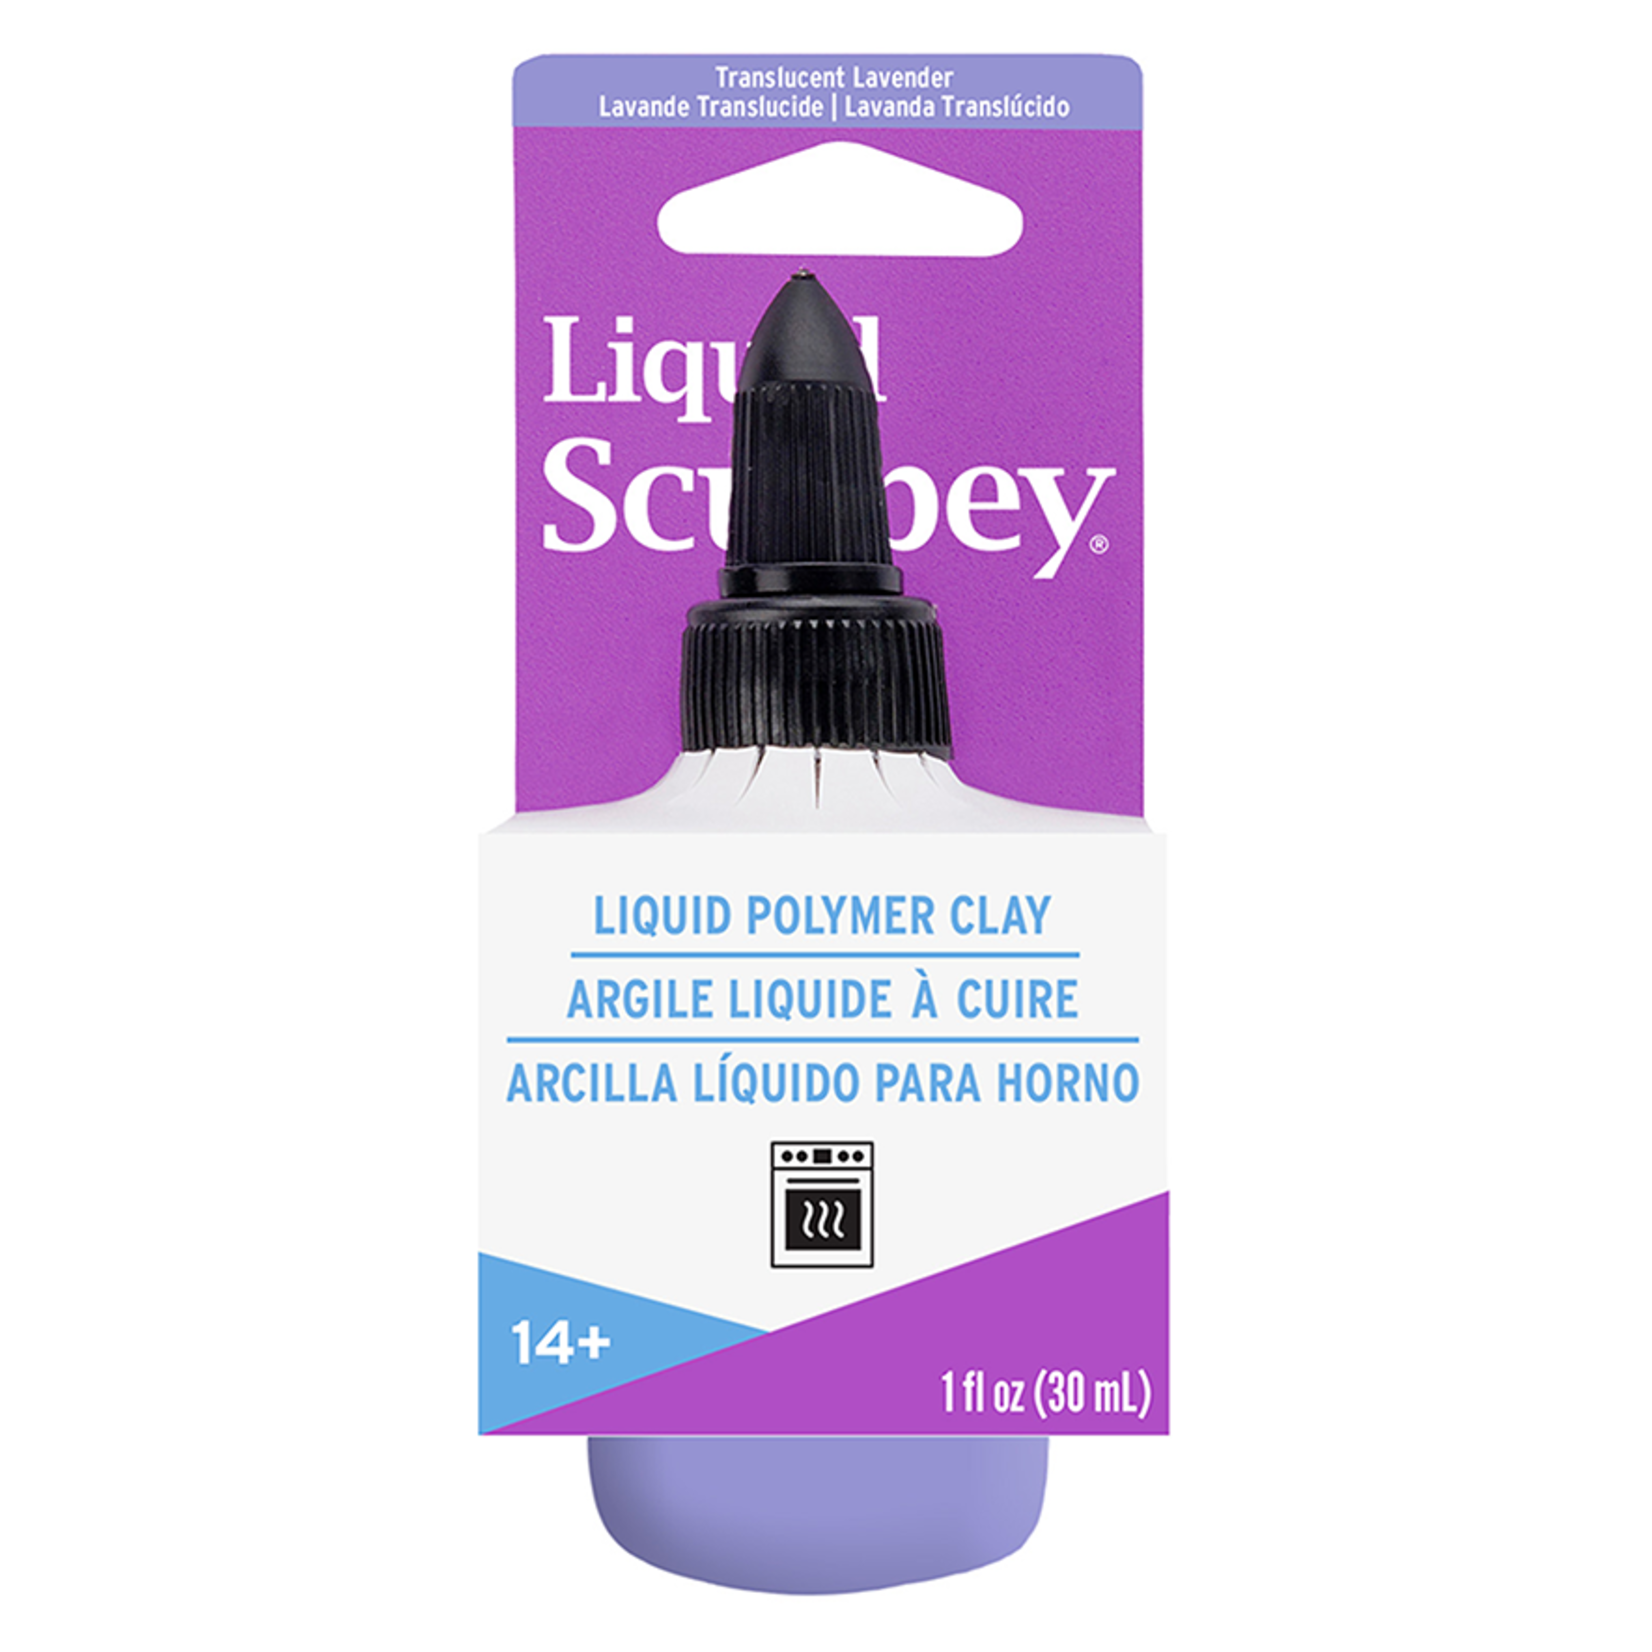 Sculpey Liquid Sculpey Translucent Lavender,1 fl oz